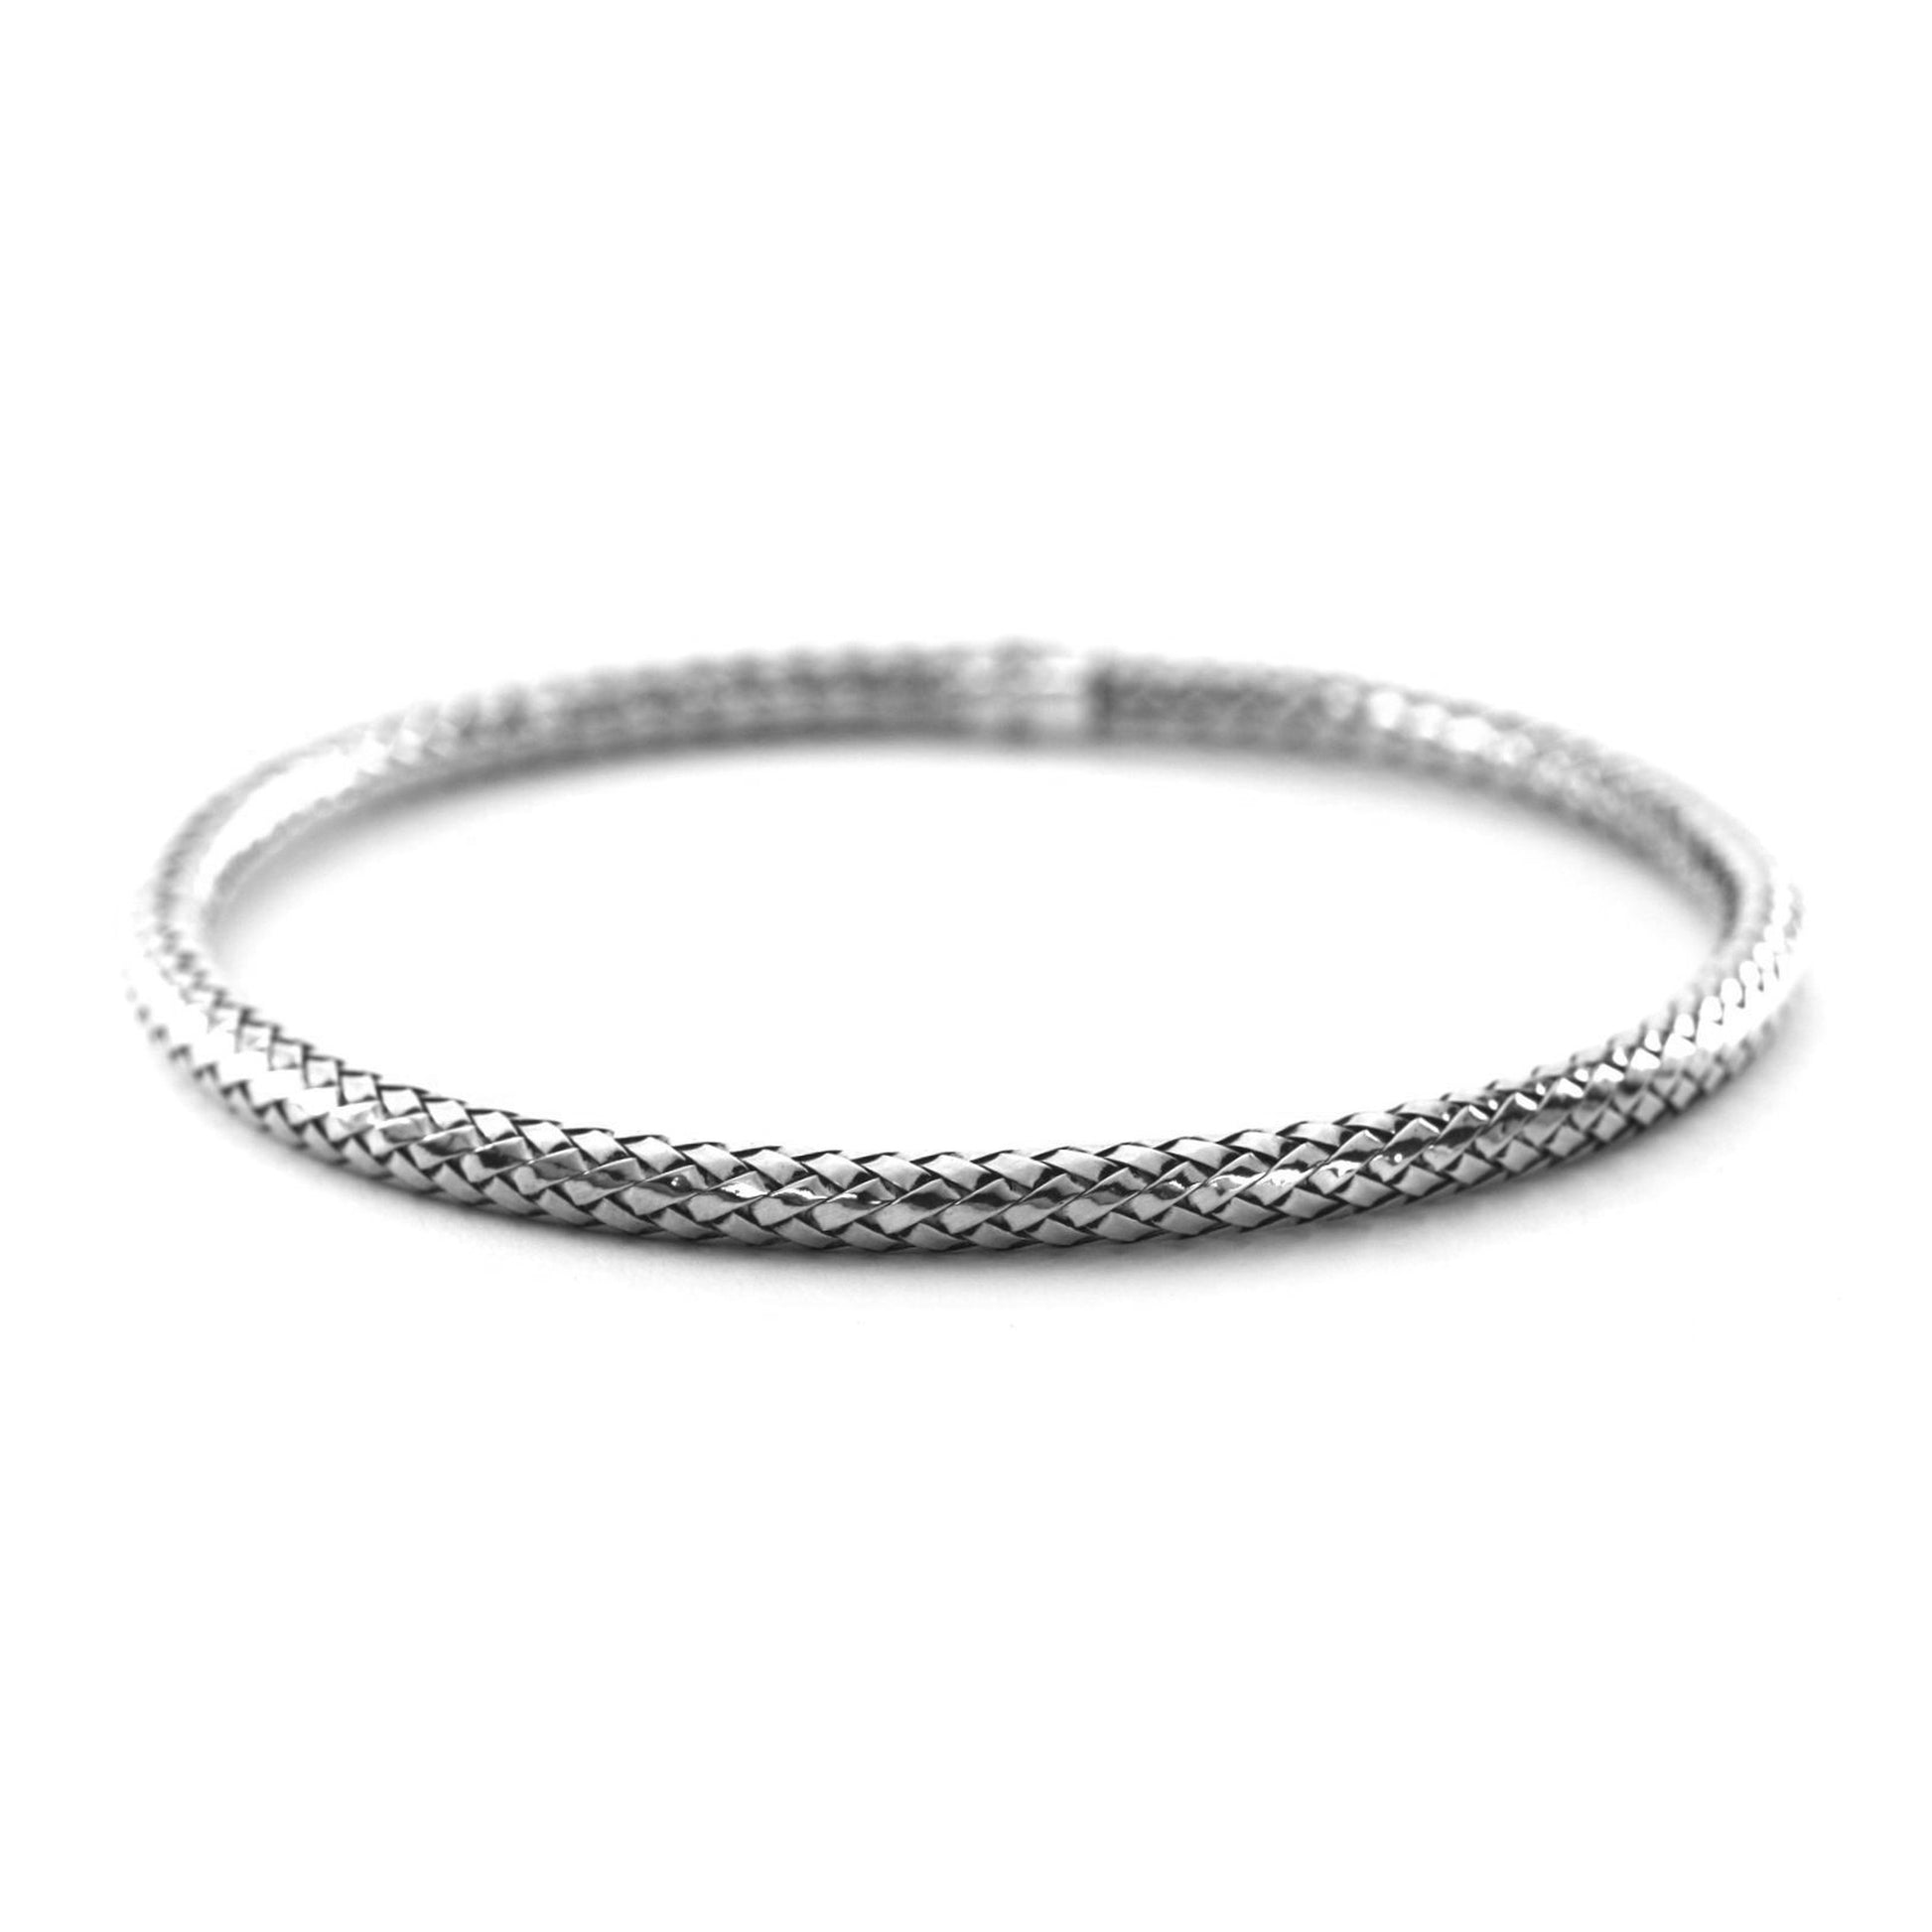 Tubular silver bangle bracelet made of woven silver strands.